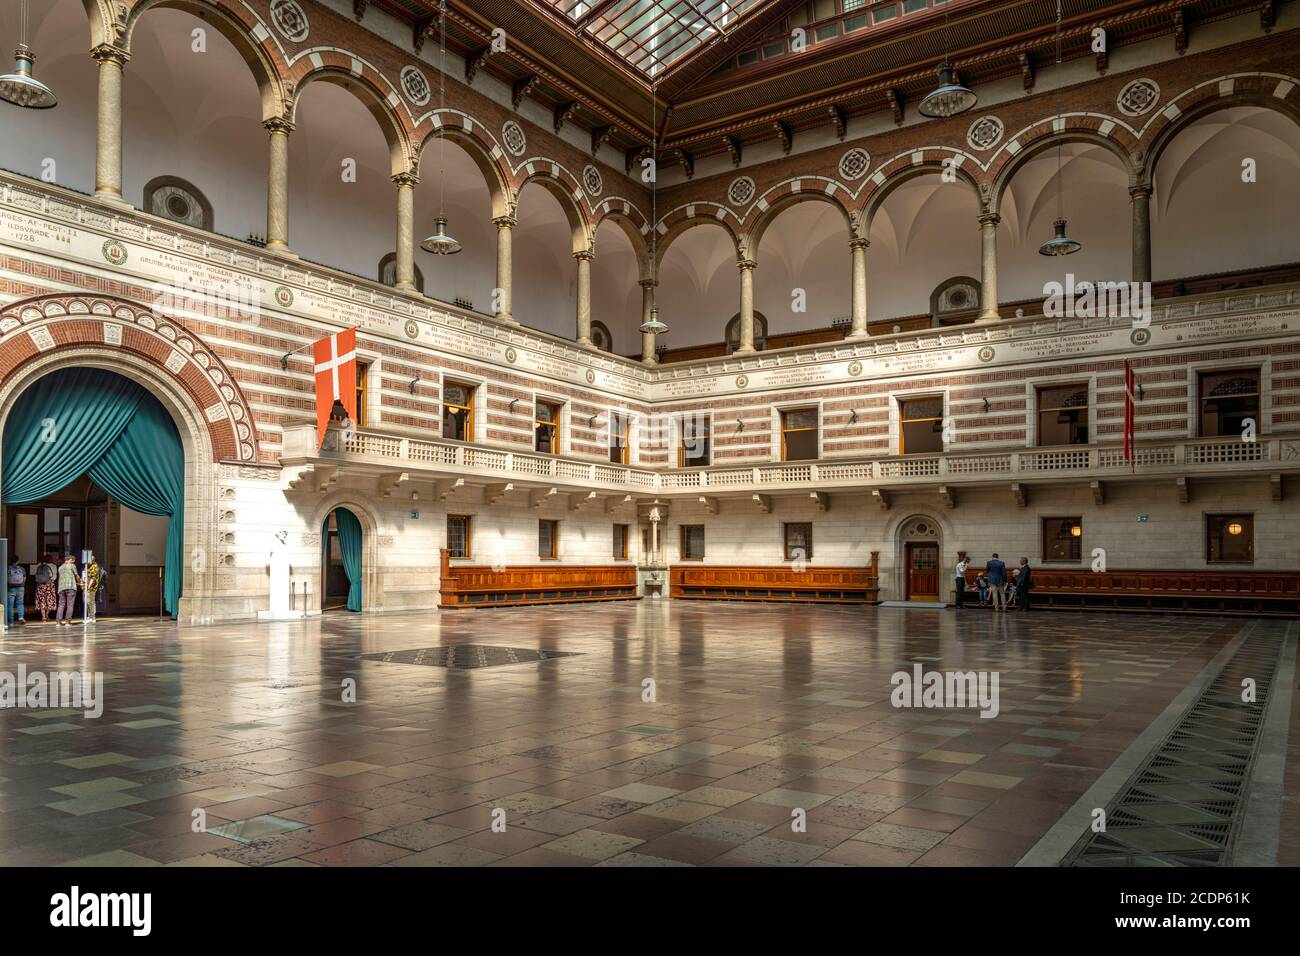 Innenraum des Kopenhagener Rathaus, Kopenhagen, Dänemark, Europa | interno del municipio, Copenaghen, Danimarca, Europa Foto Stock